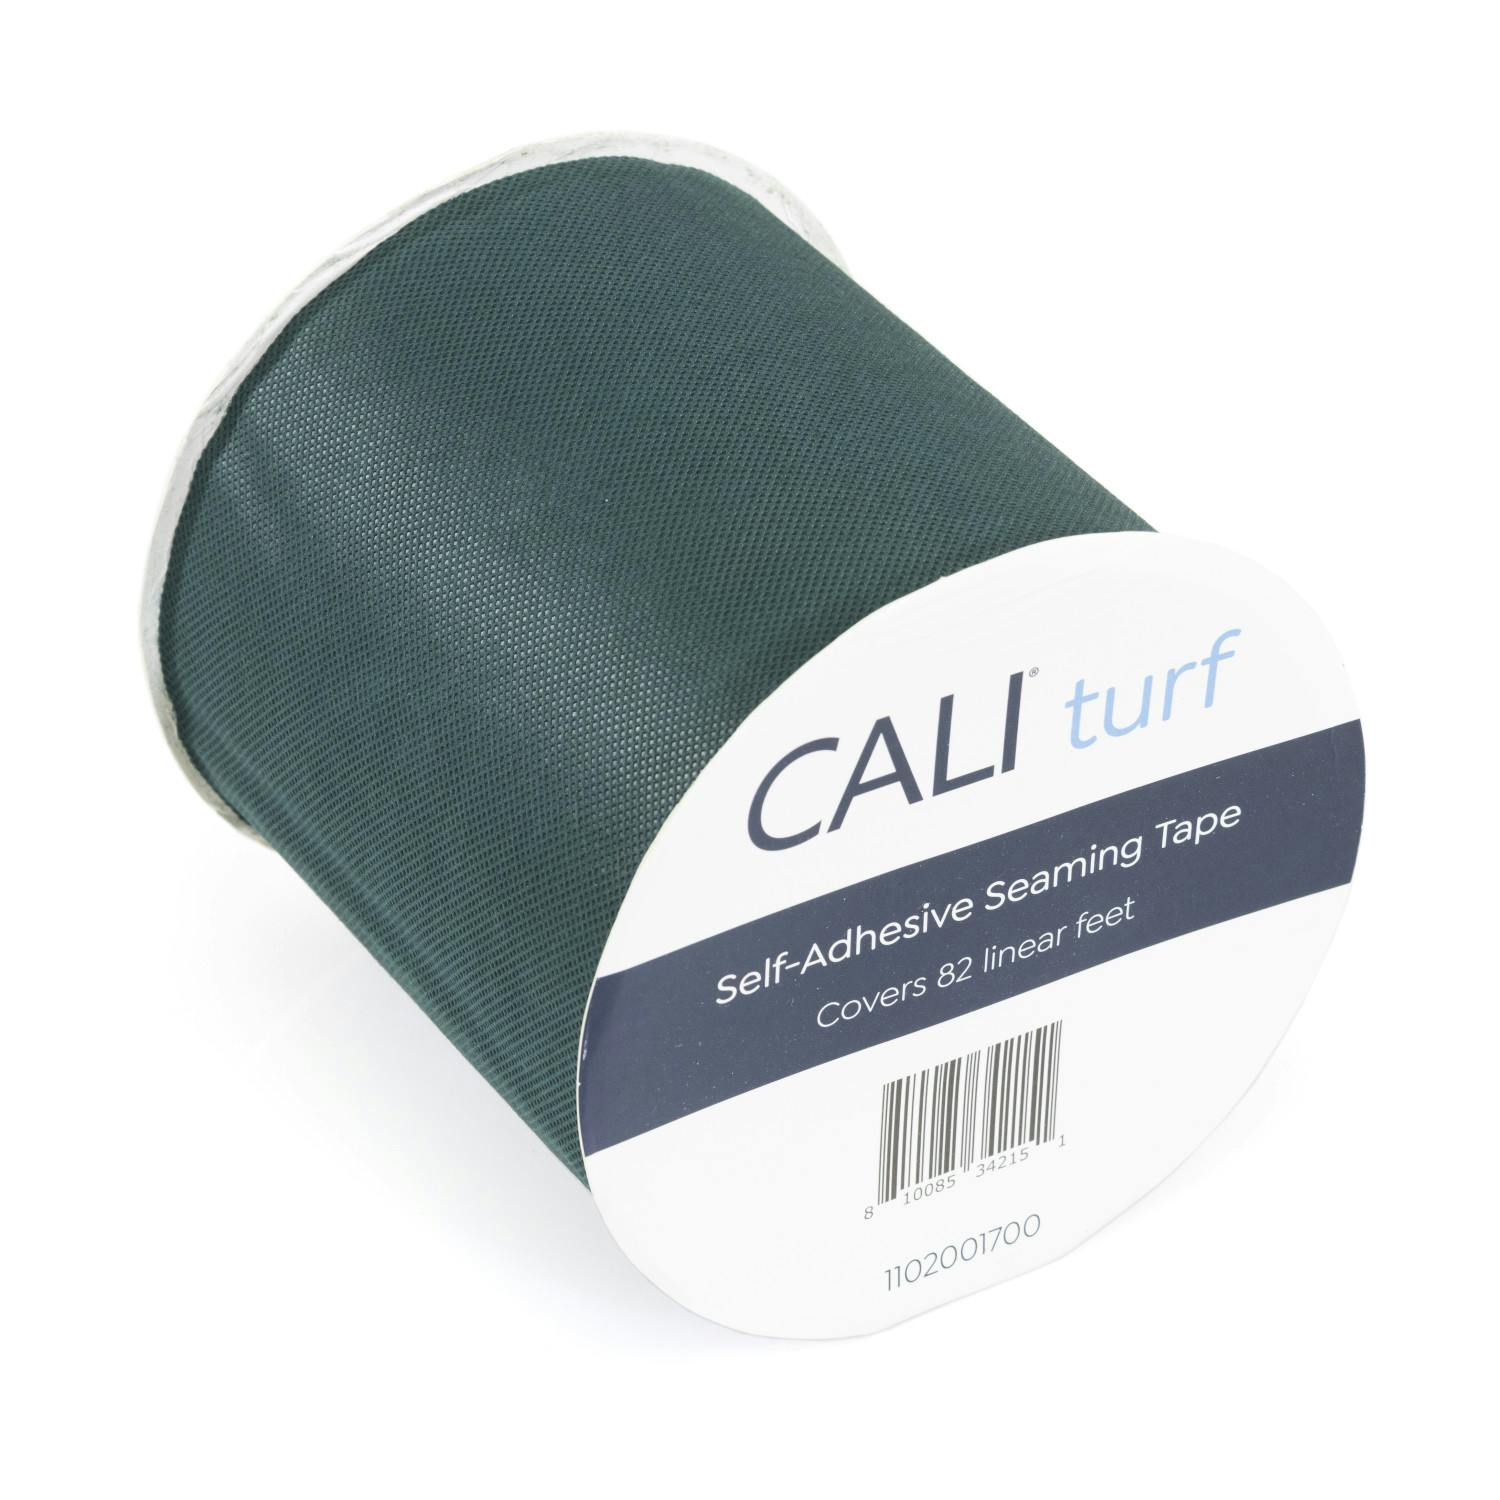 CALI Turf - Tape Self-Adhesive Seaming Tape